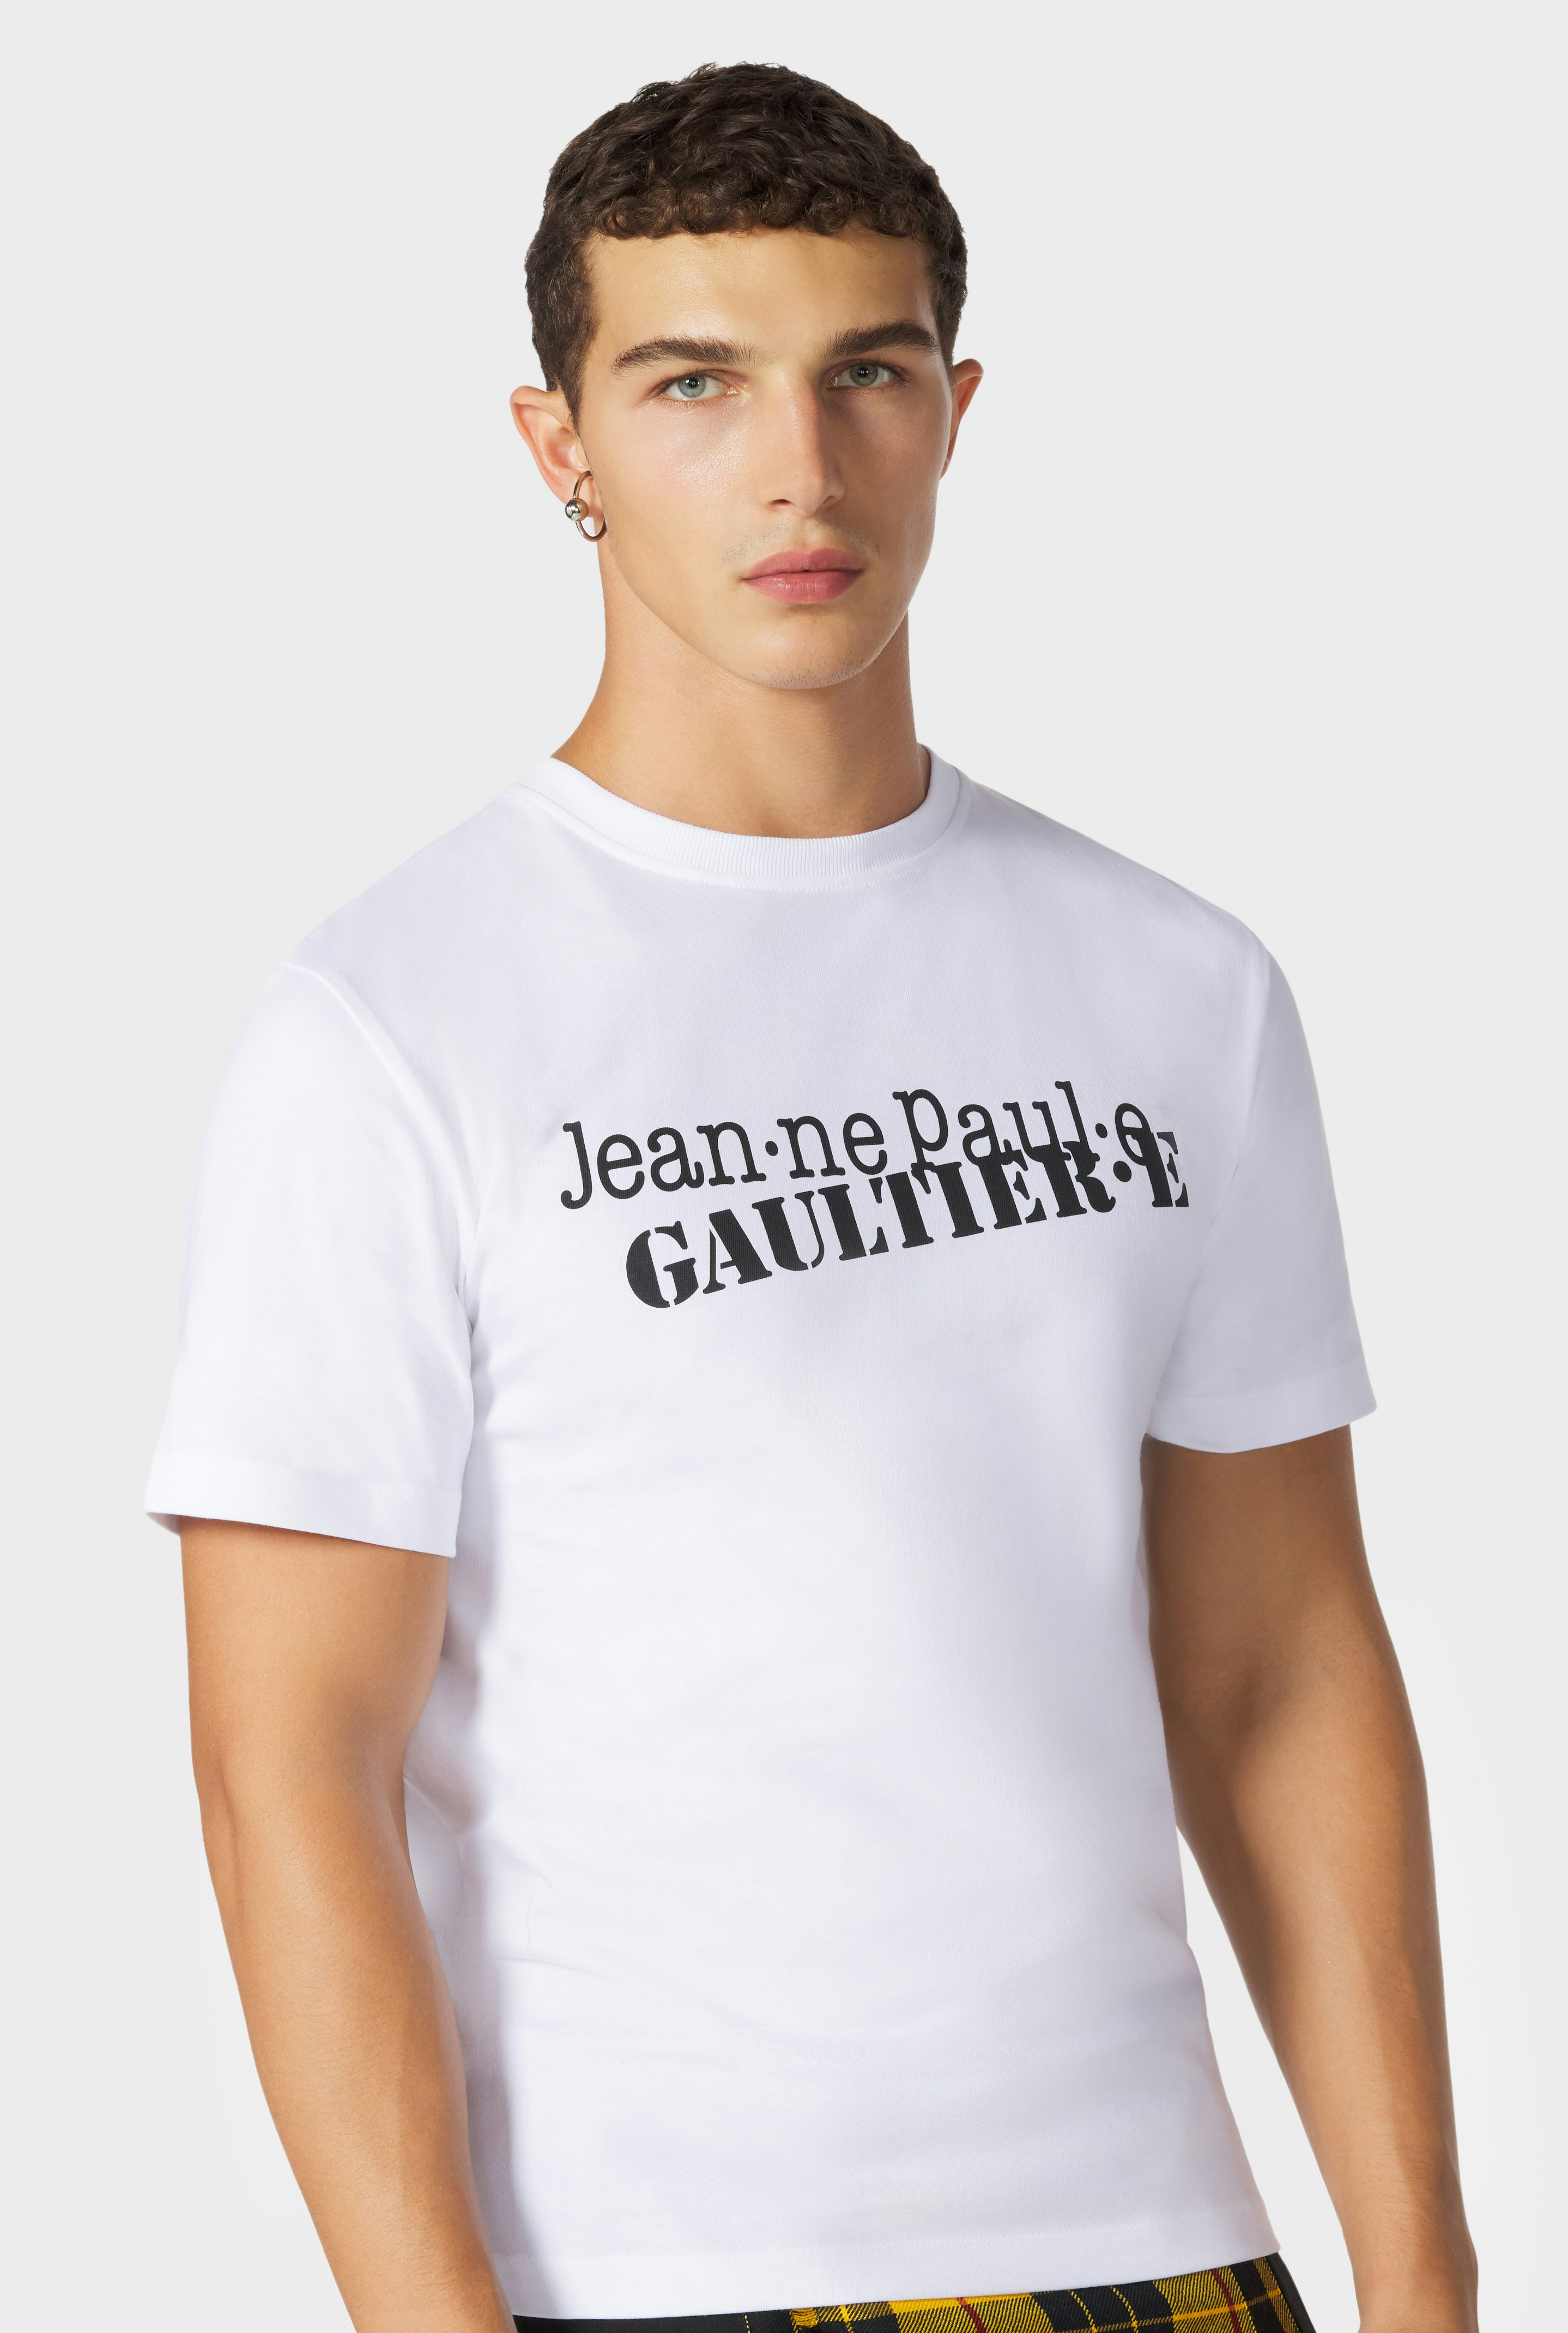 Pride - The Jean.ne Paul.e Gaultier.e T-shirt